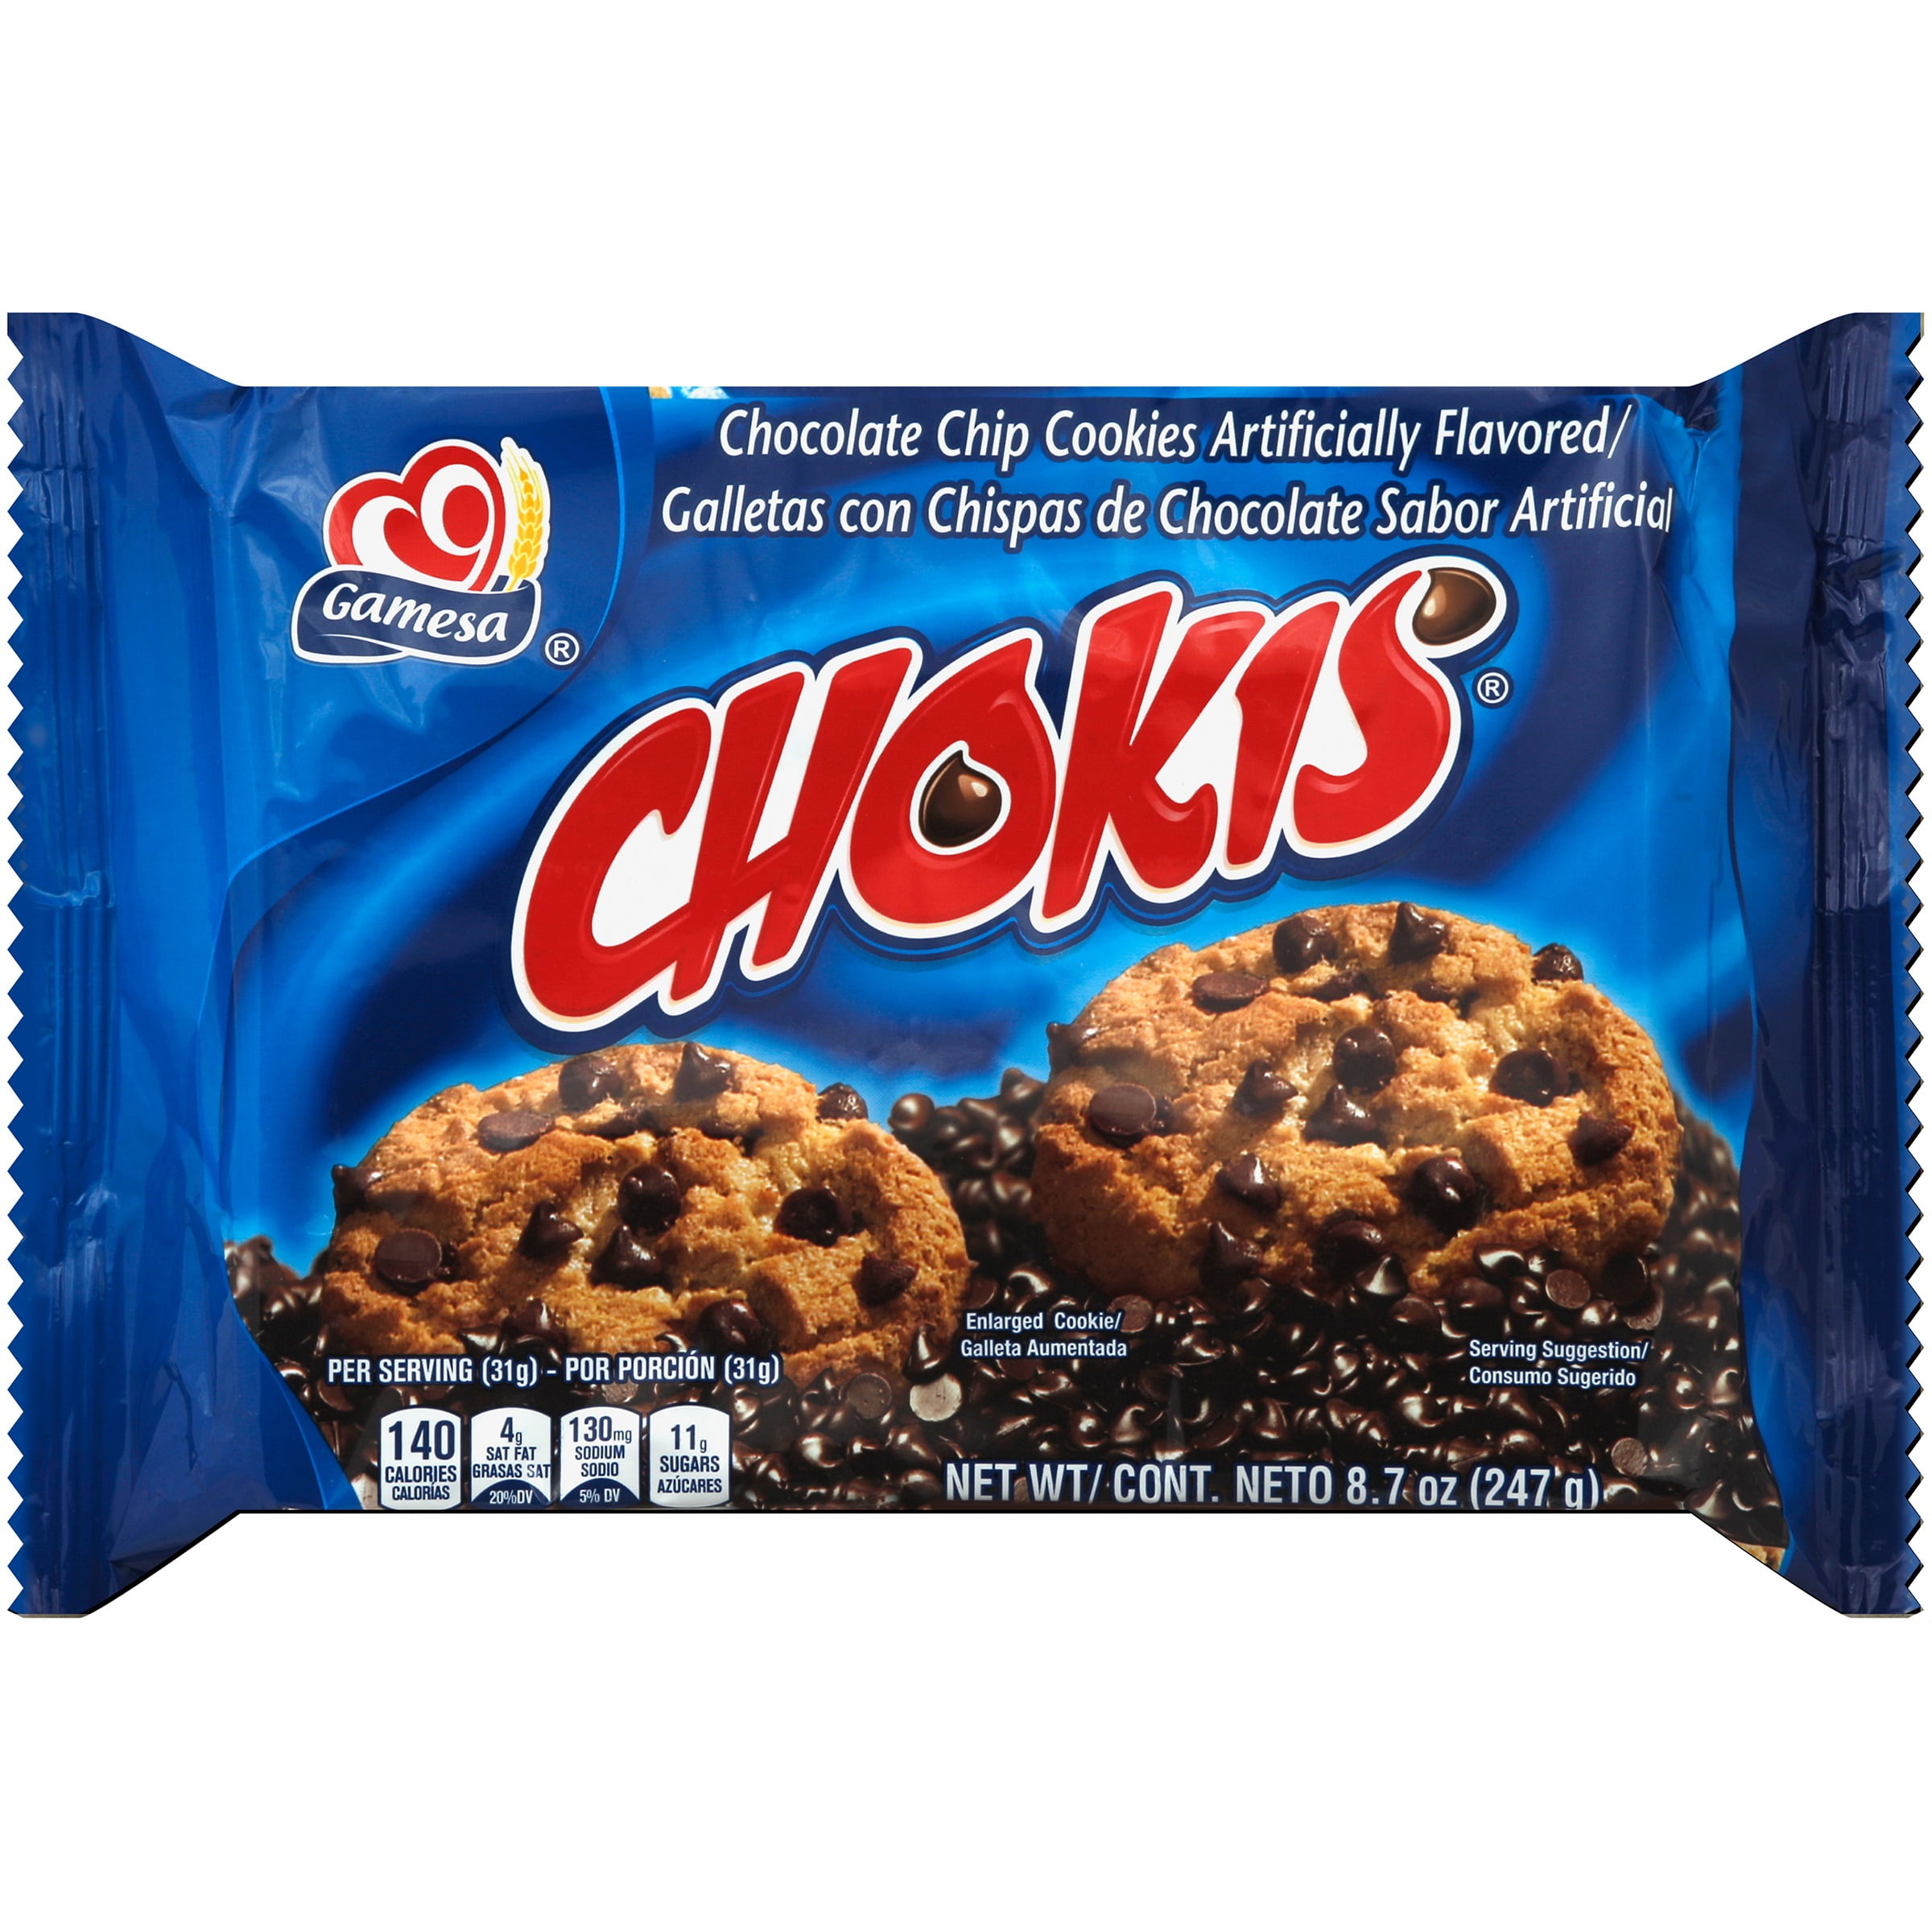 Gamesa Chokis Chocolate Chip Cookies, 8.7 Oz. - Walmart.com - Walmart.com